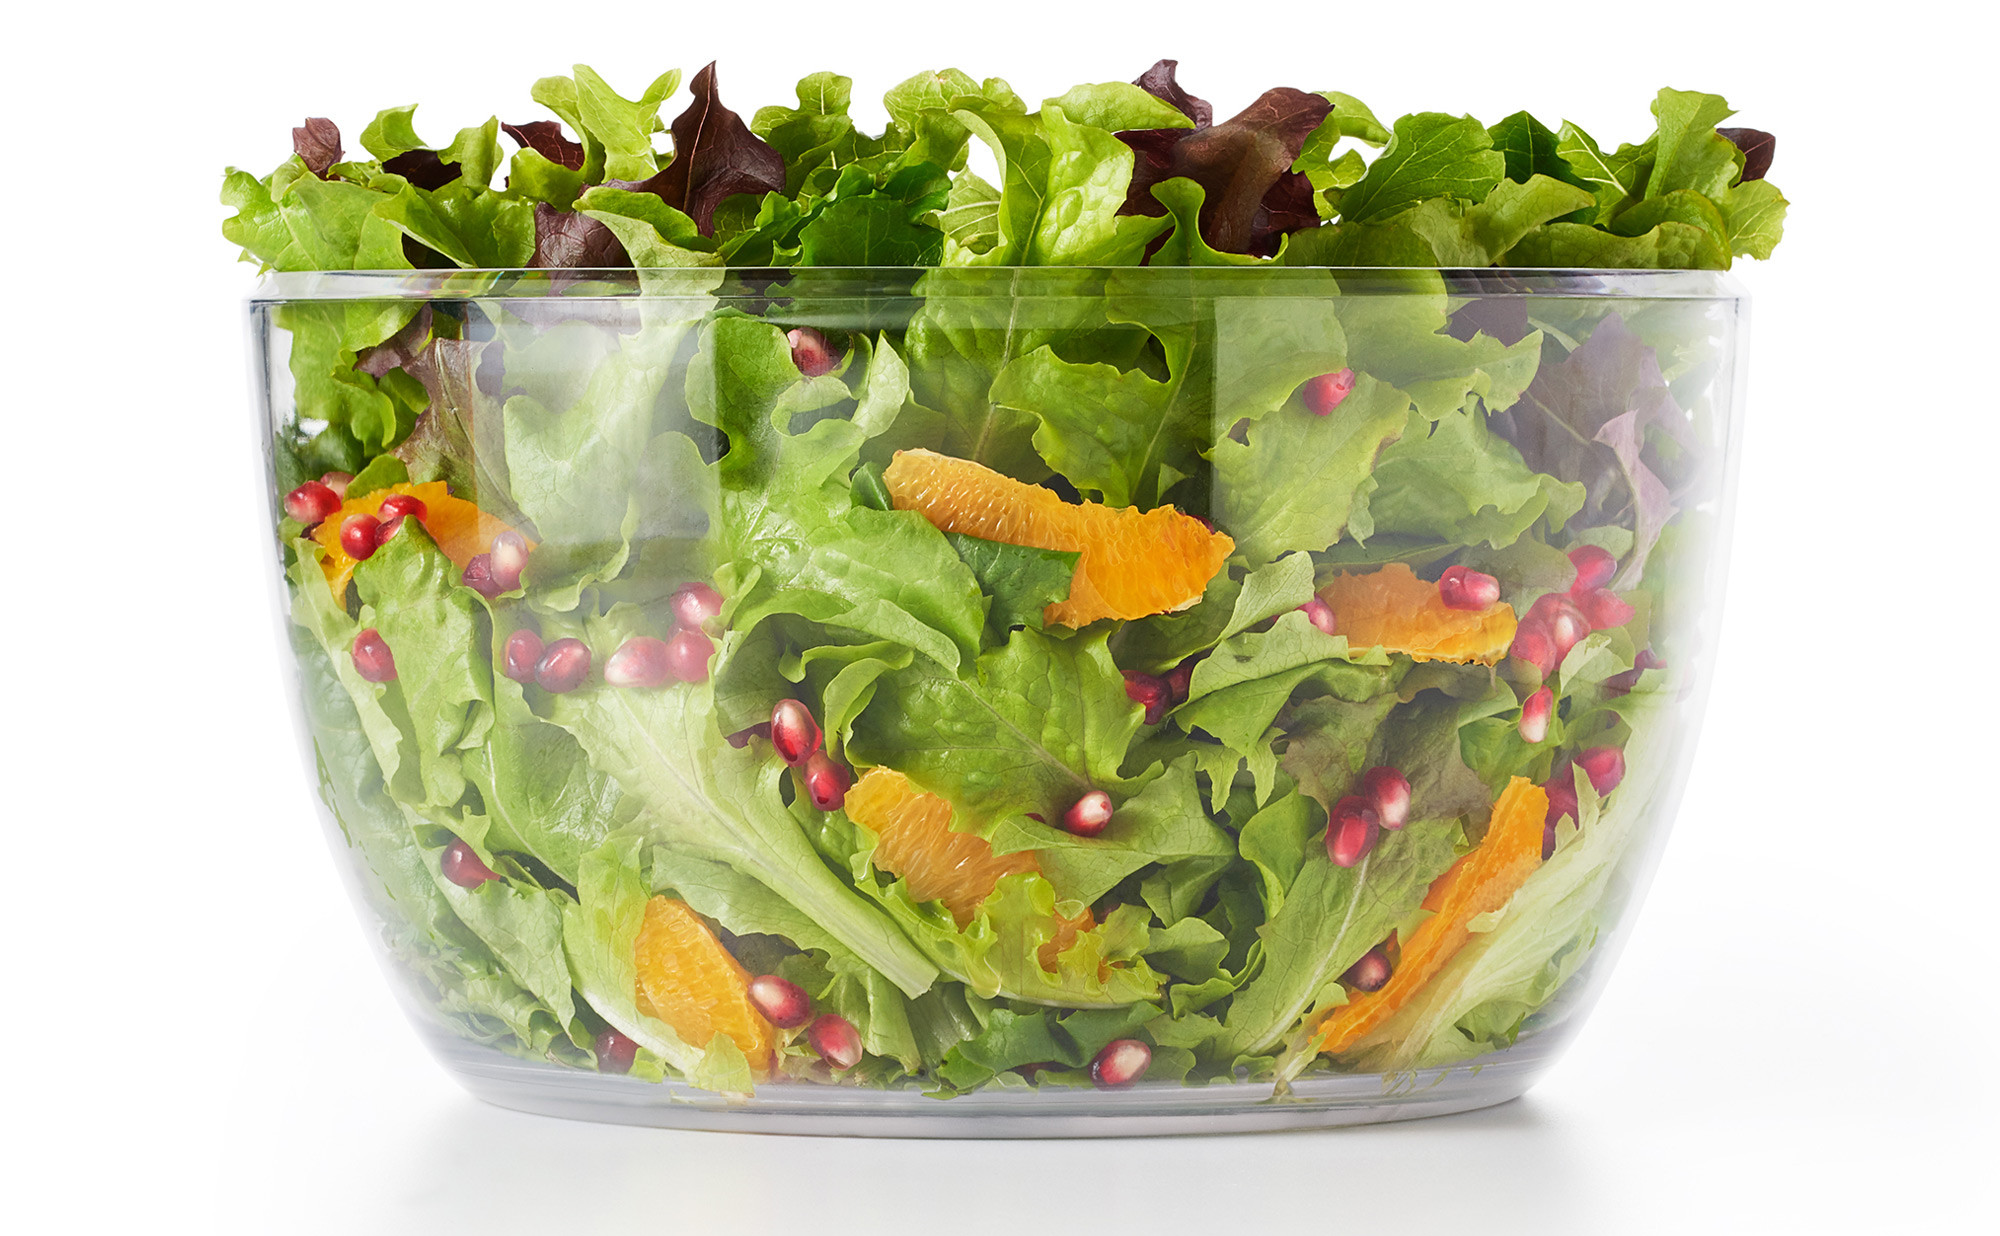 NICO Essoreuse à Salade Professionnelle Garantie à Vie Grande